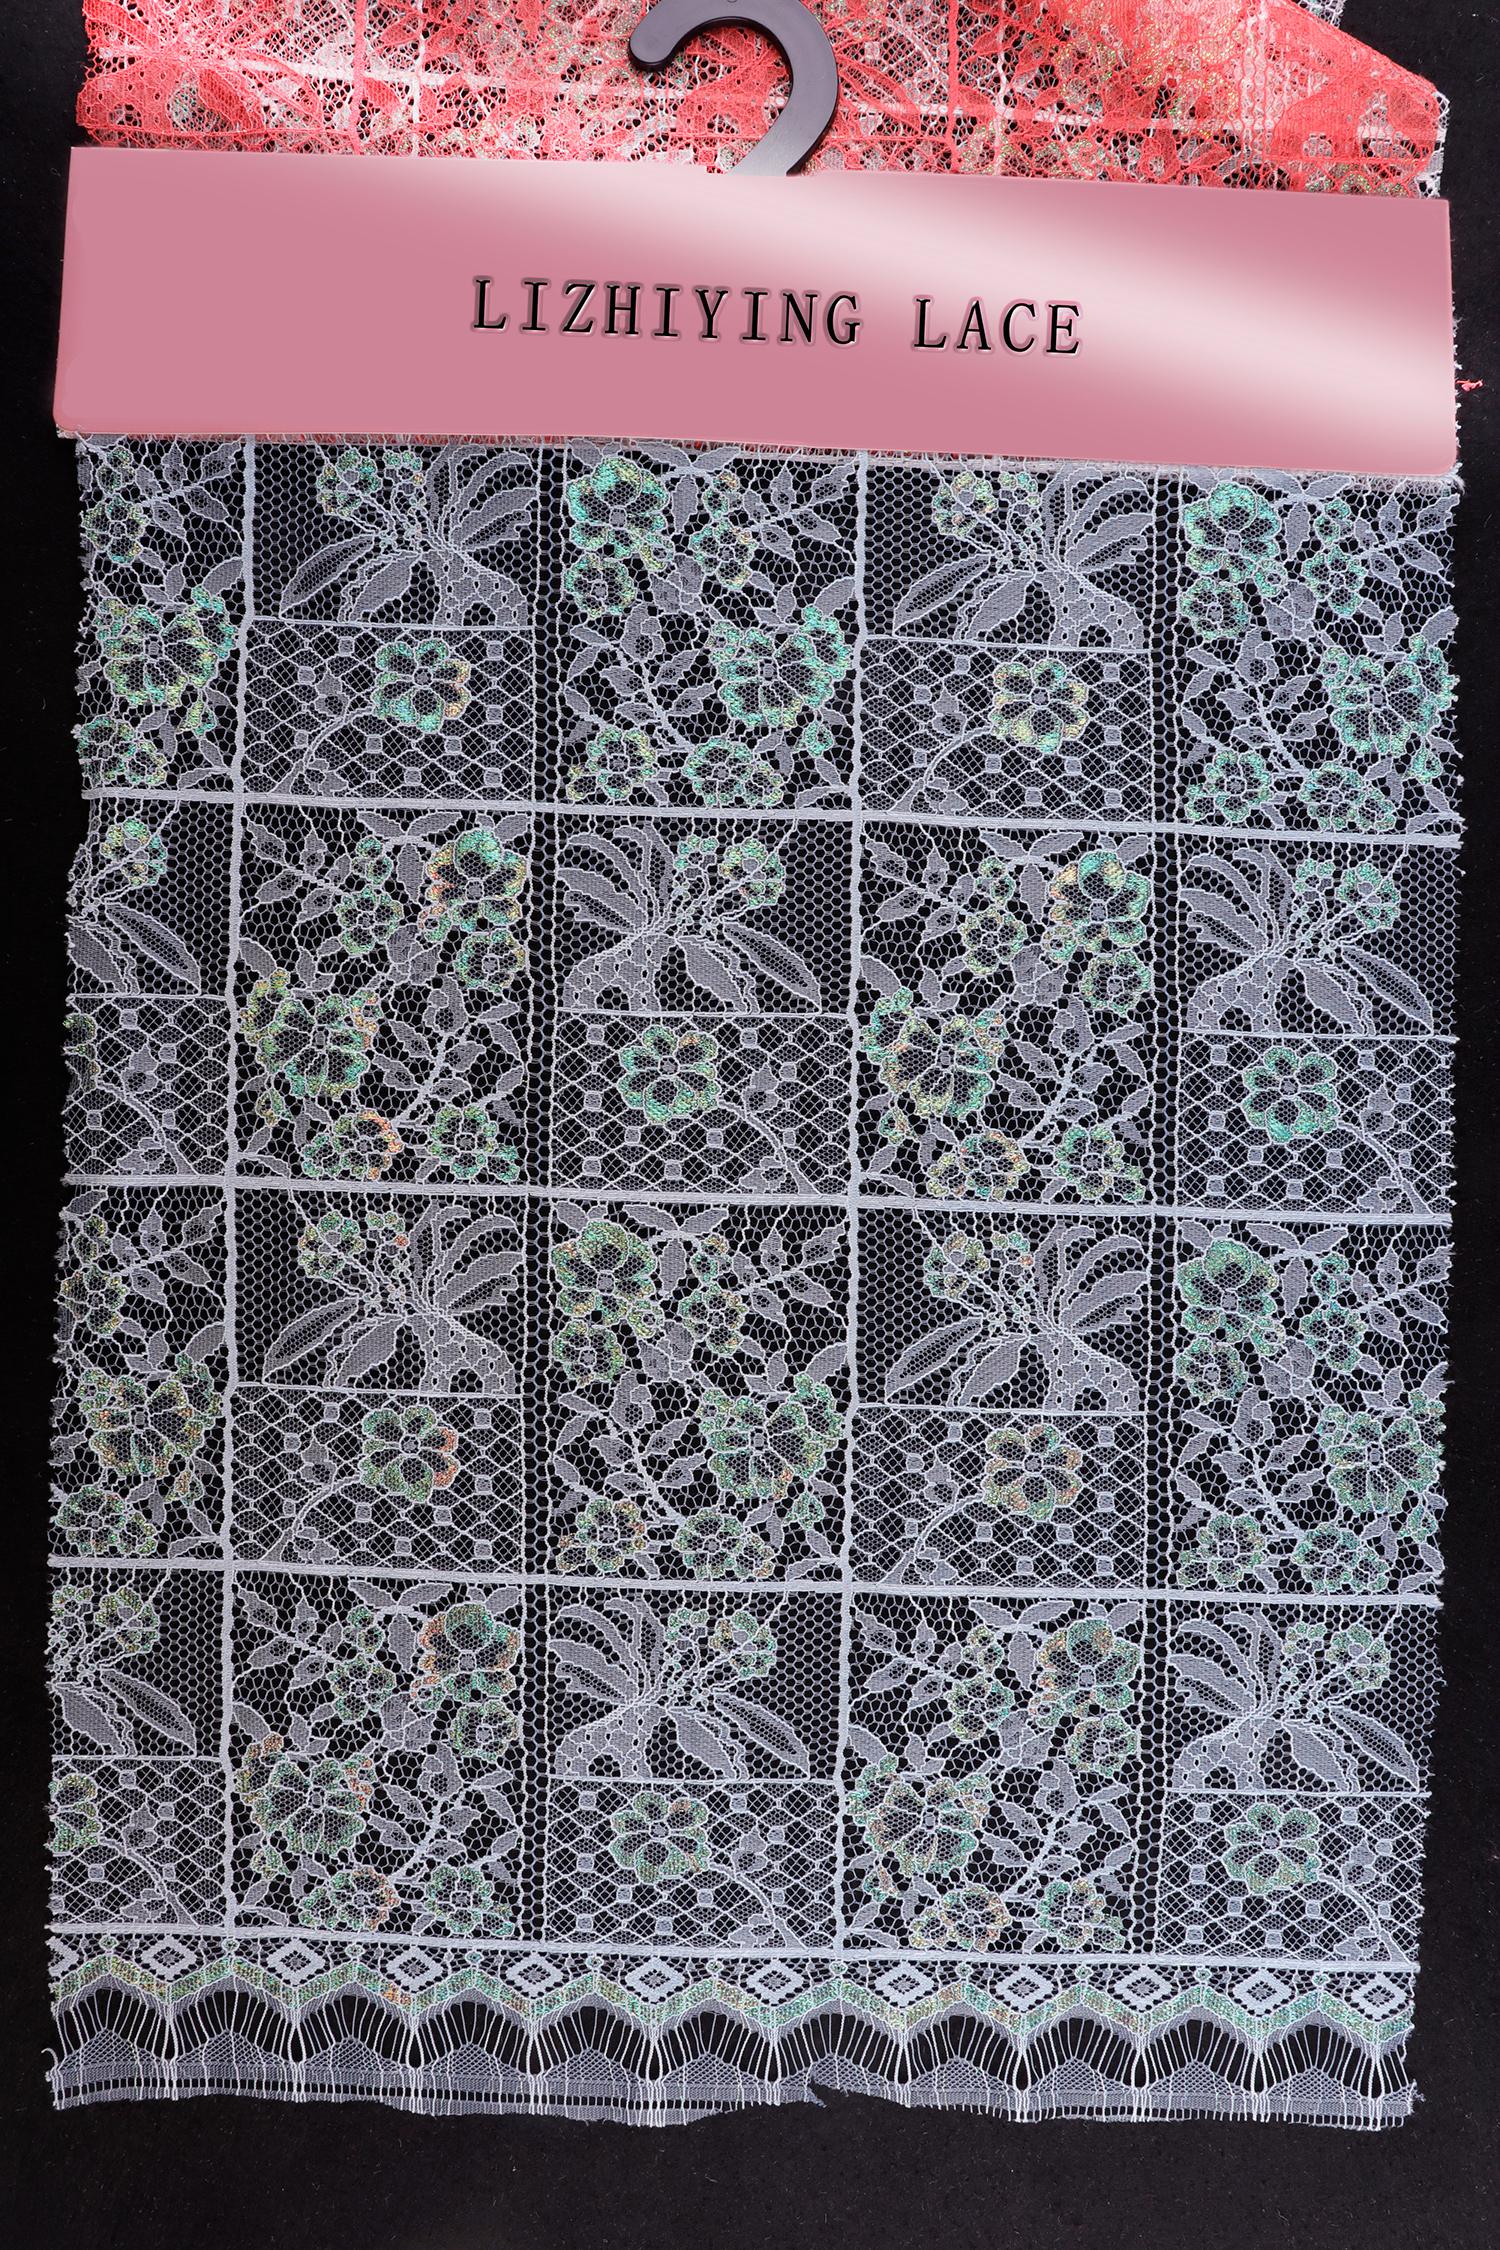 Lizhiying's dream color silk window flower metal yarn